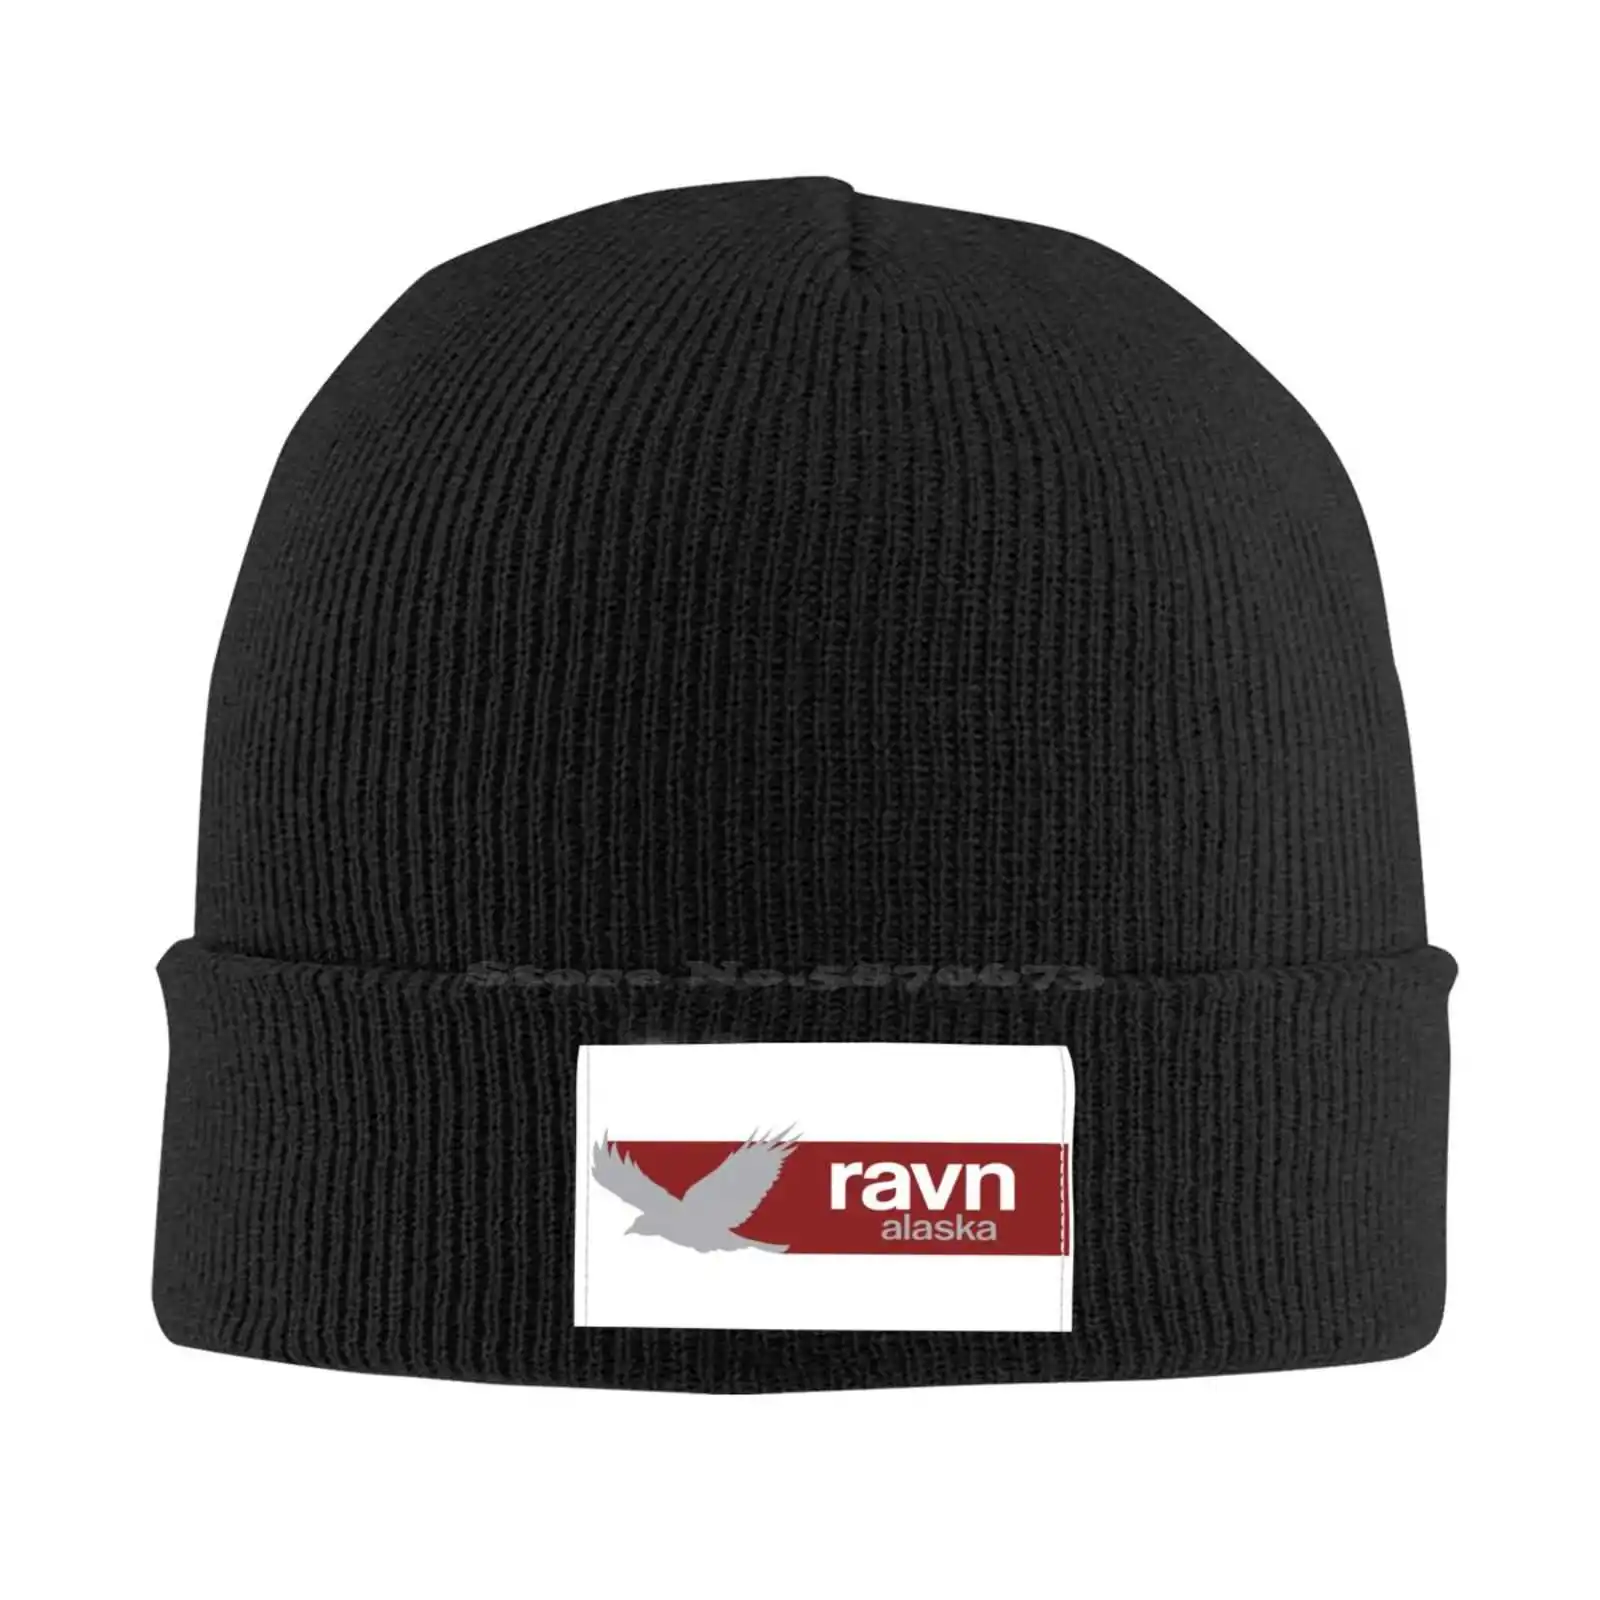 

Ravn Alaska Logo Printed High-quality Knitted cap Denim cap Baseball cap Casual hat